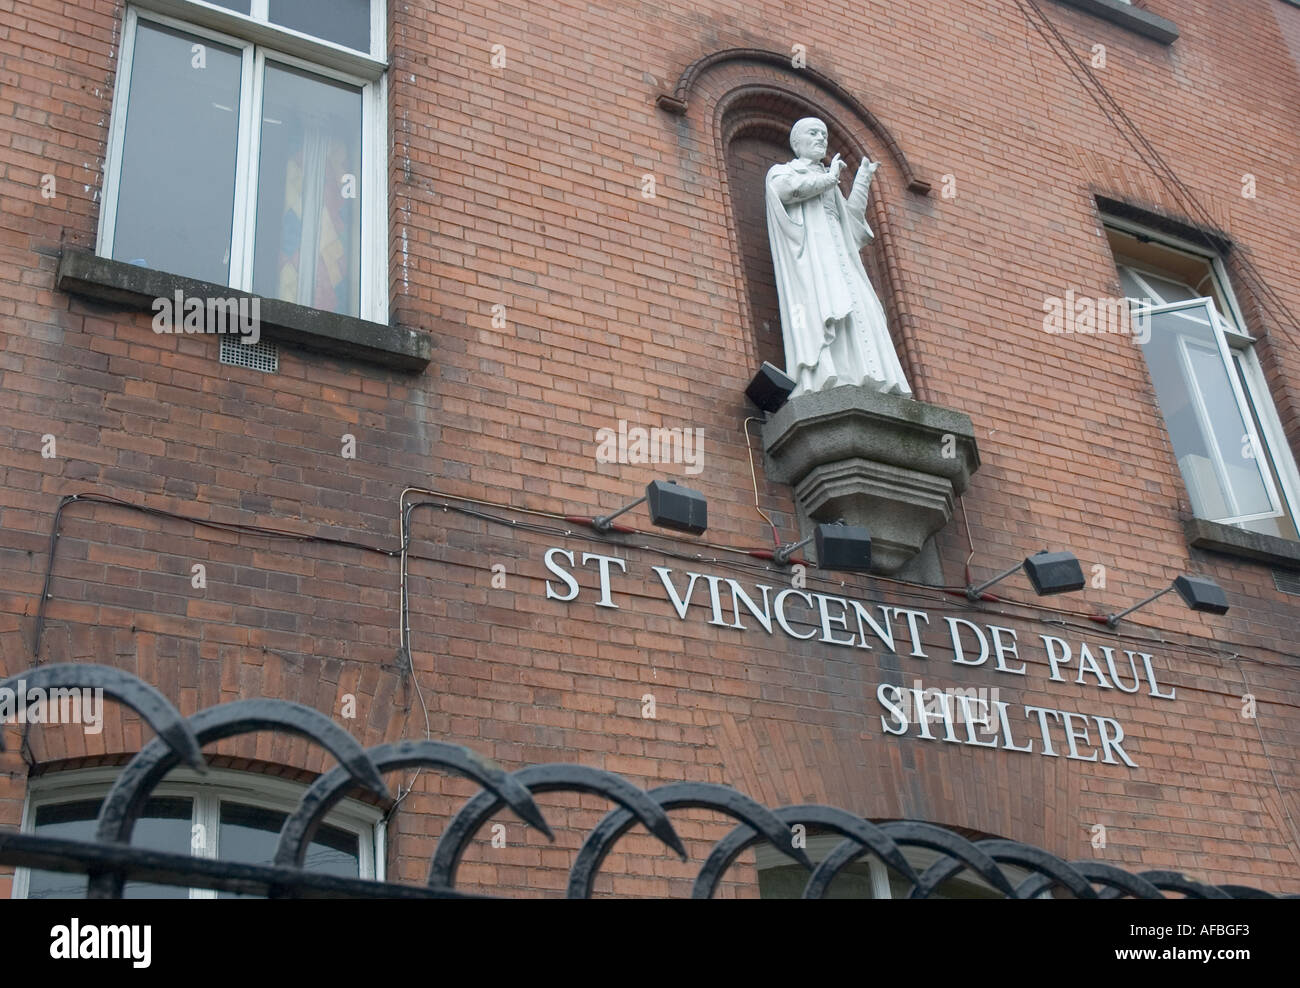 Saint Vincent de Paul shelter in Dublin Ireland Stock Photo